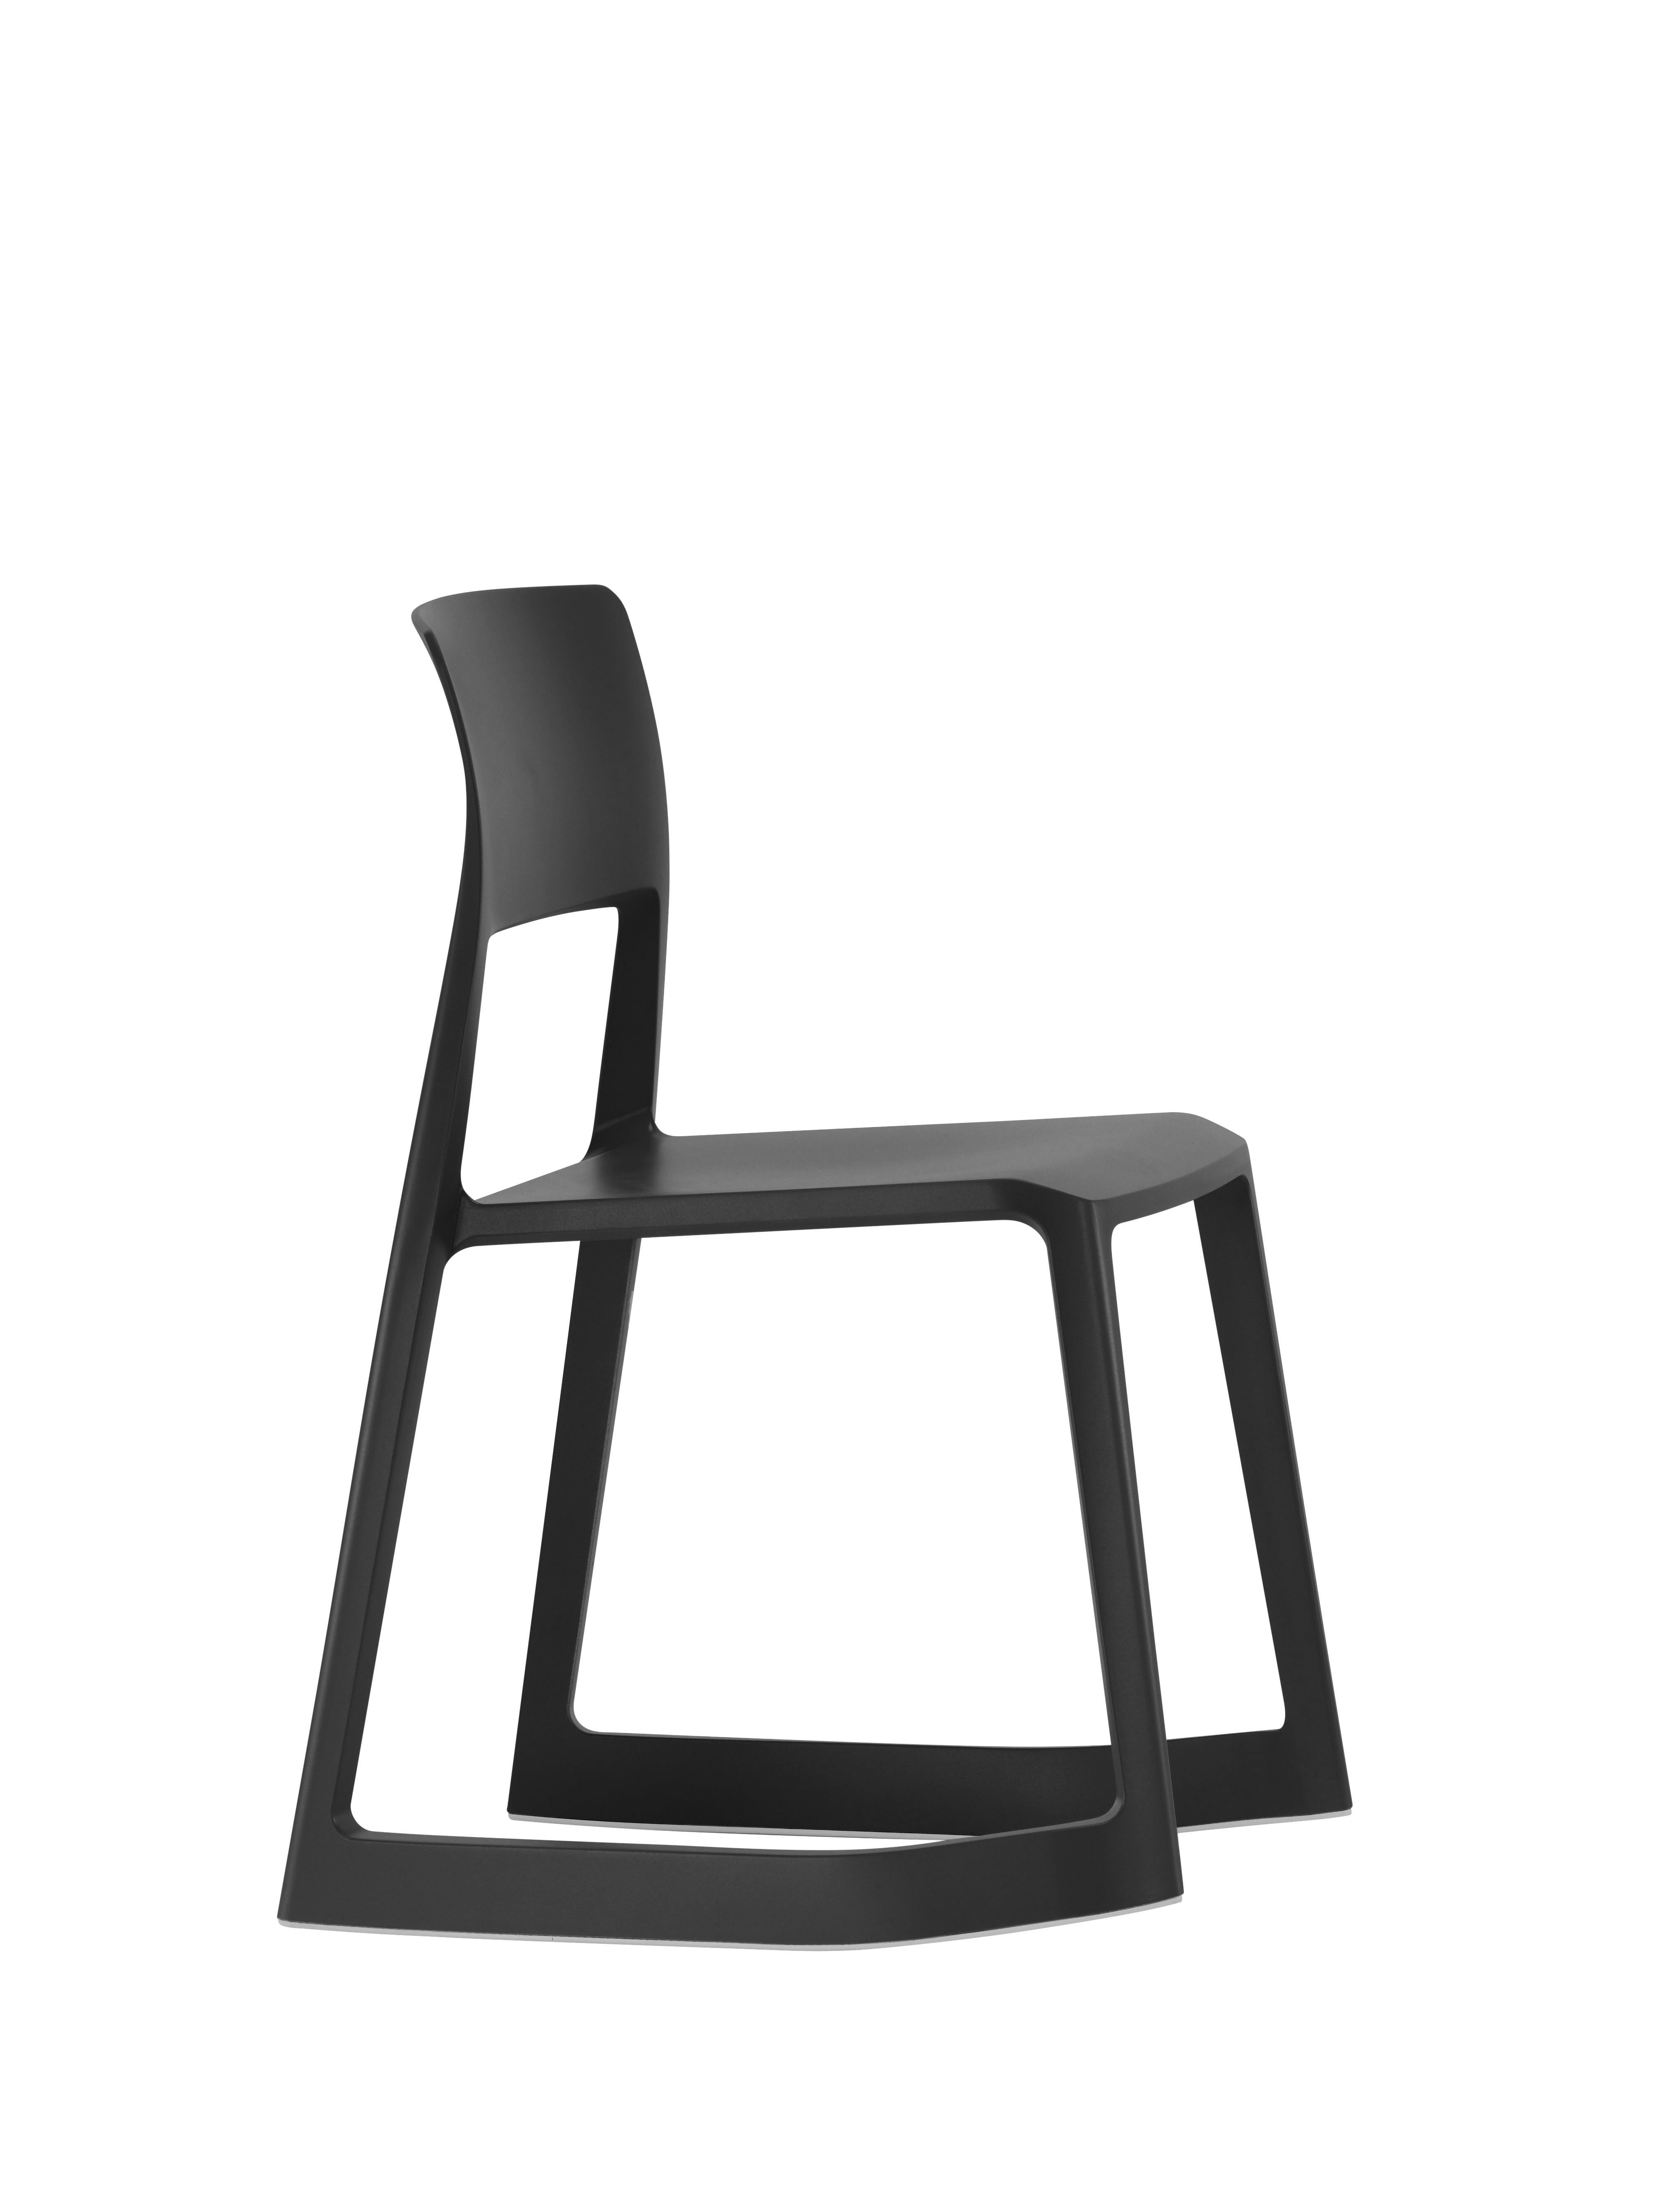 Modern Vitra Tip Ton Chair in Basic Dark by Edward Barber & Jay Osgerby For Sale